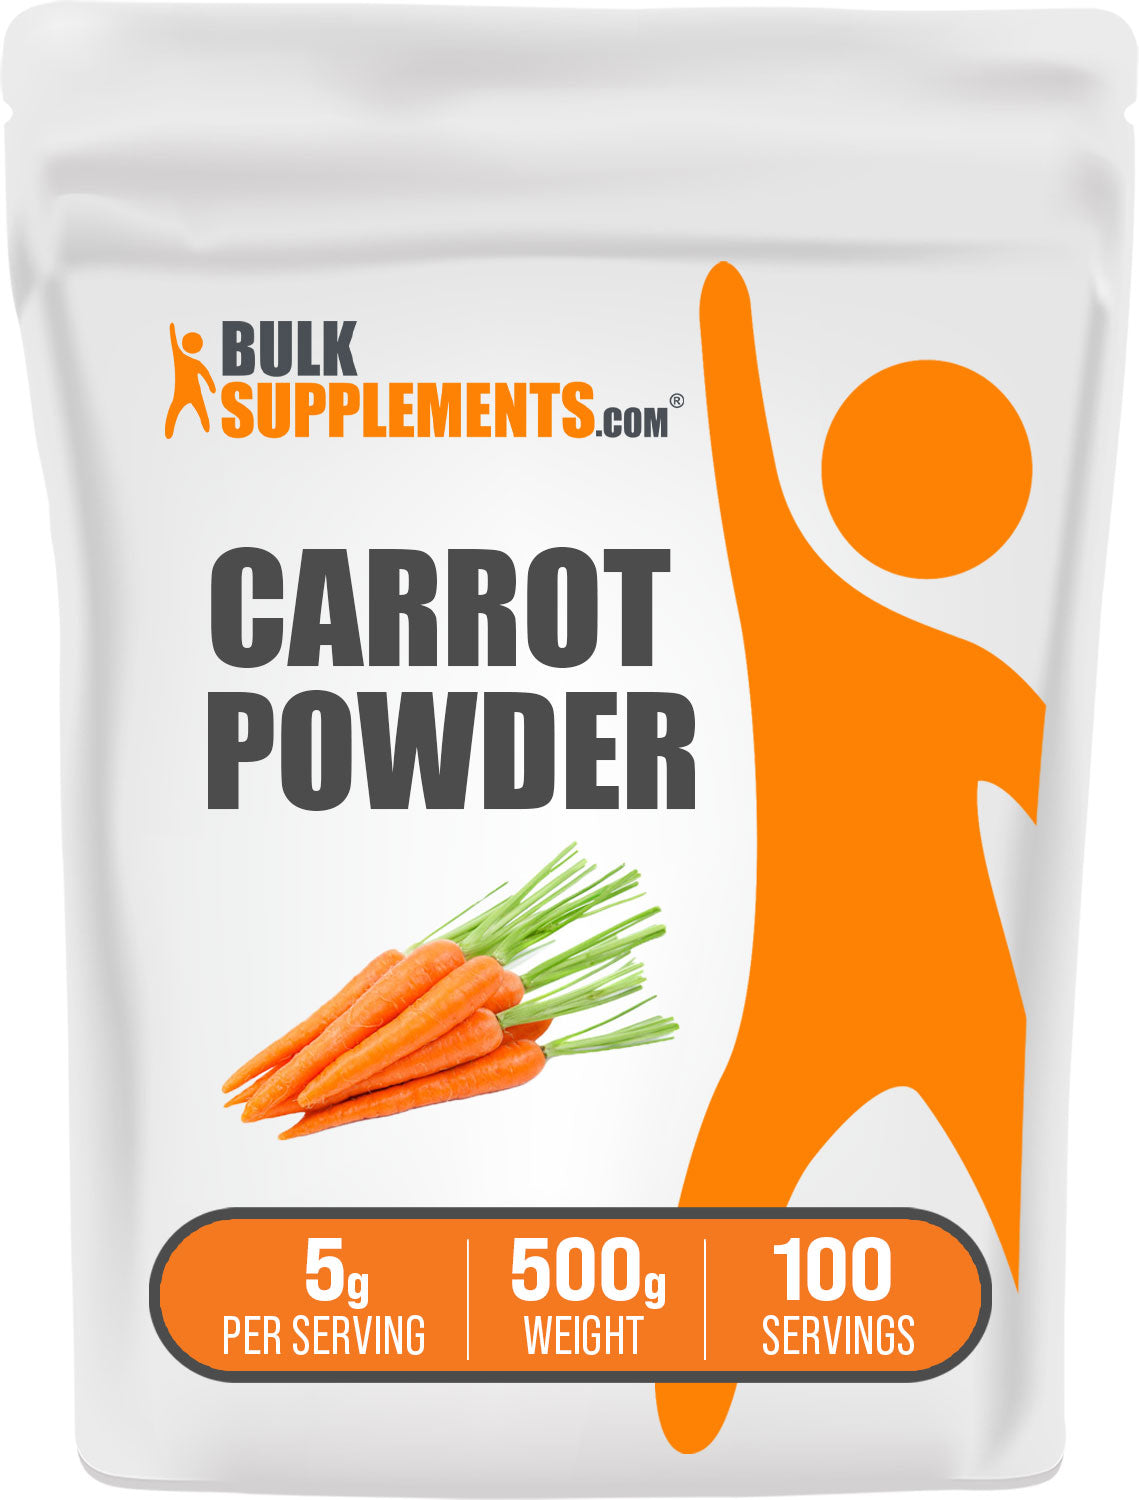 500g of carrot powder